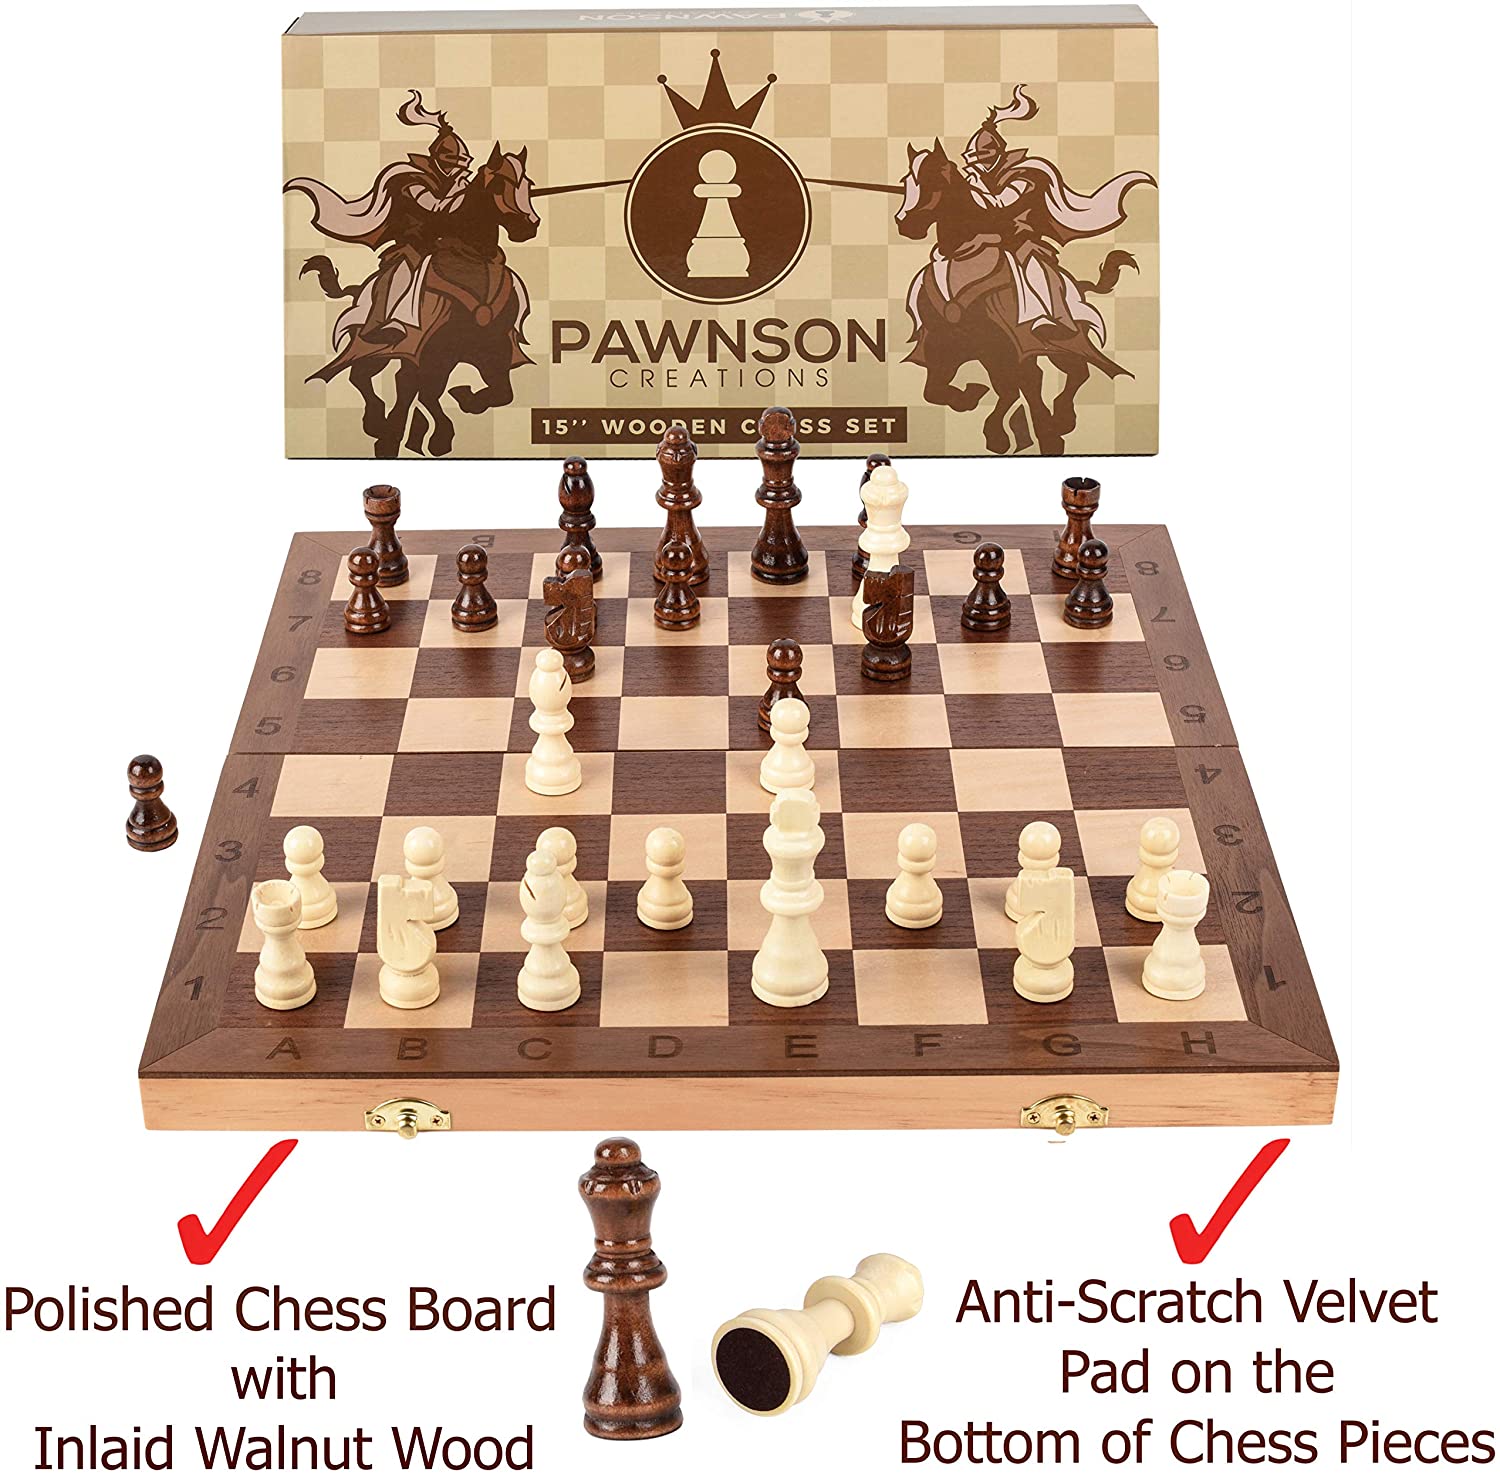 15”x15” Wooden Chess Set